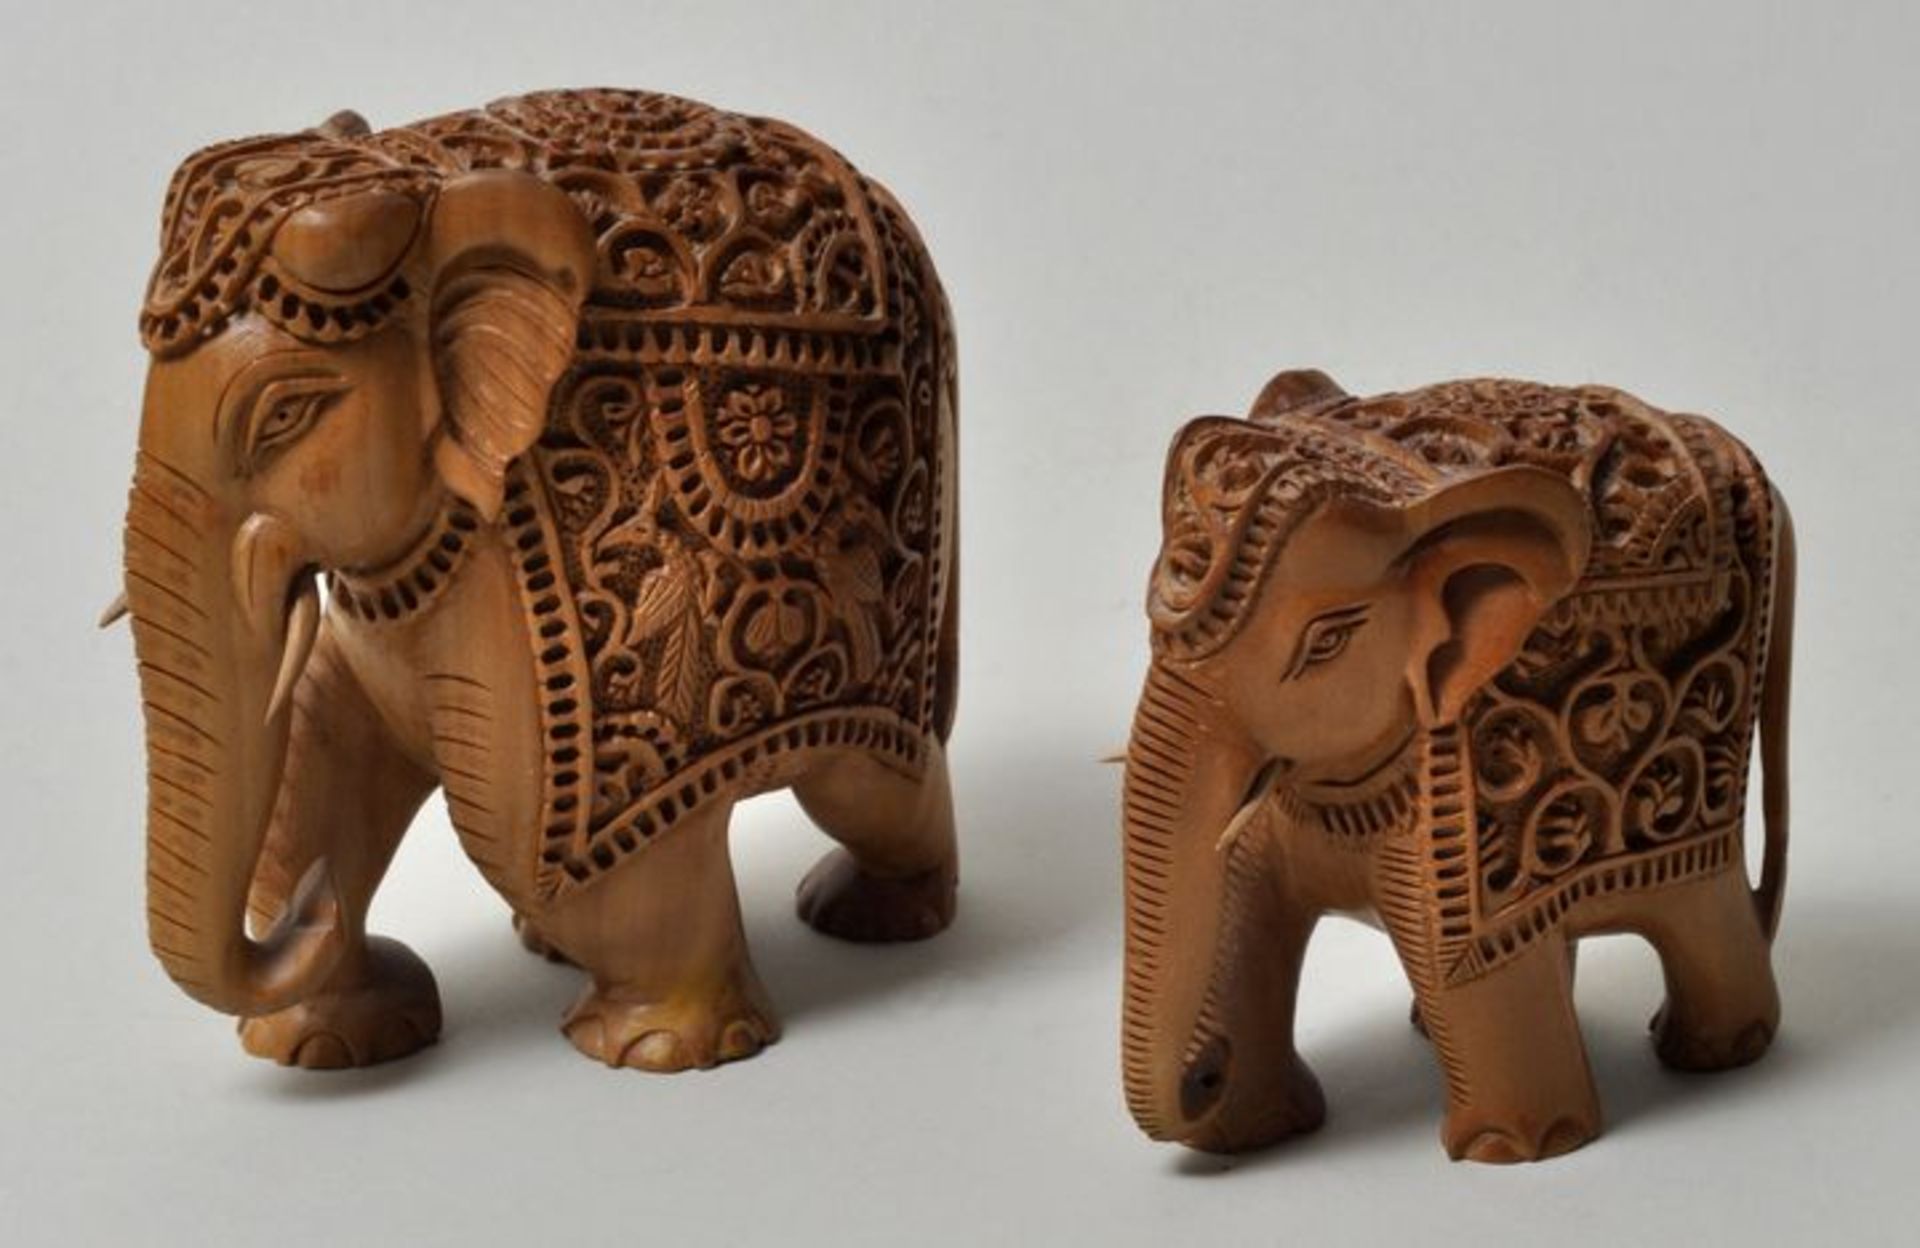 Indien. Elefanten.Sandelholz, geschnitzt. Ein Paar aufwendig geschnitzte Elefantenfiguren mit